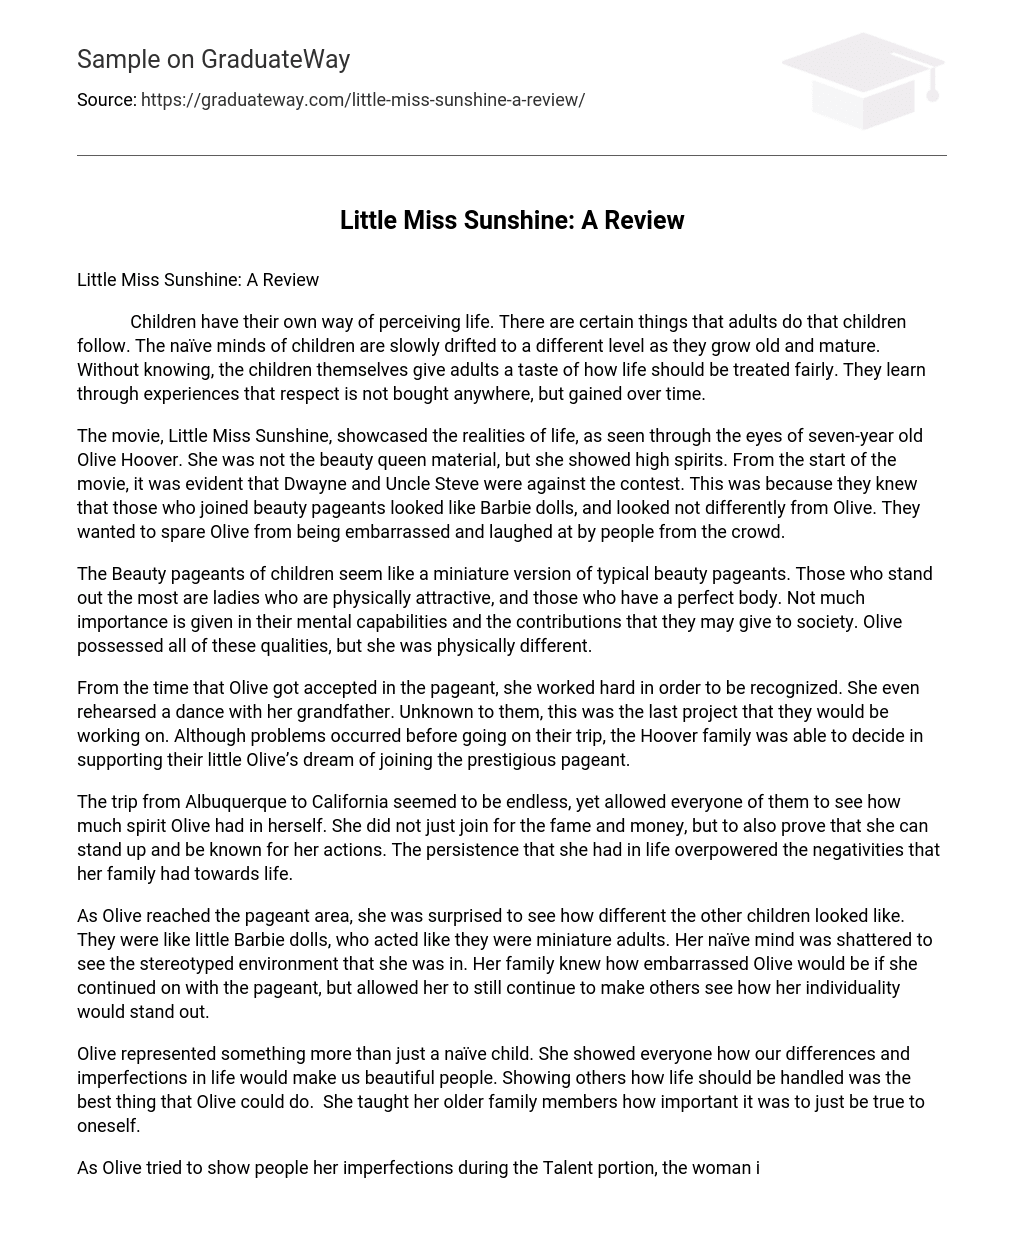 Little Miss Sunshine: A Review